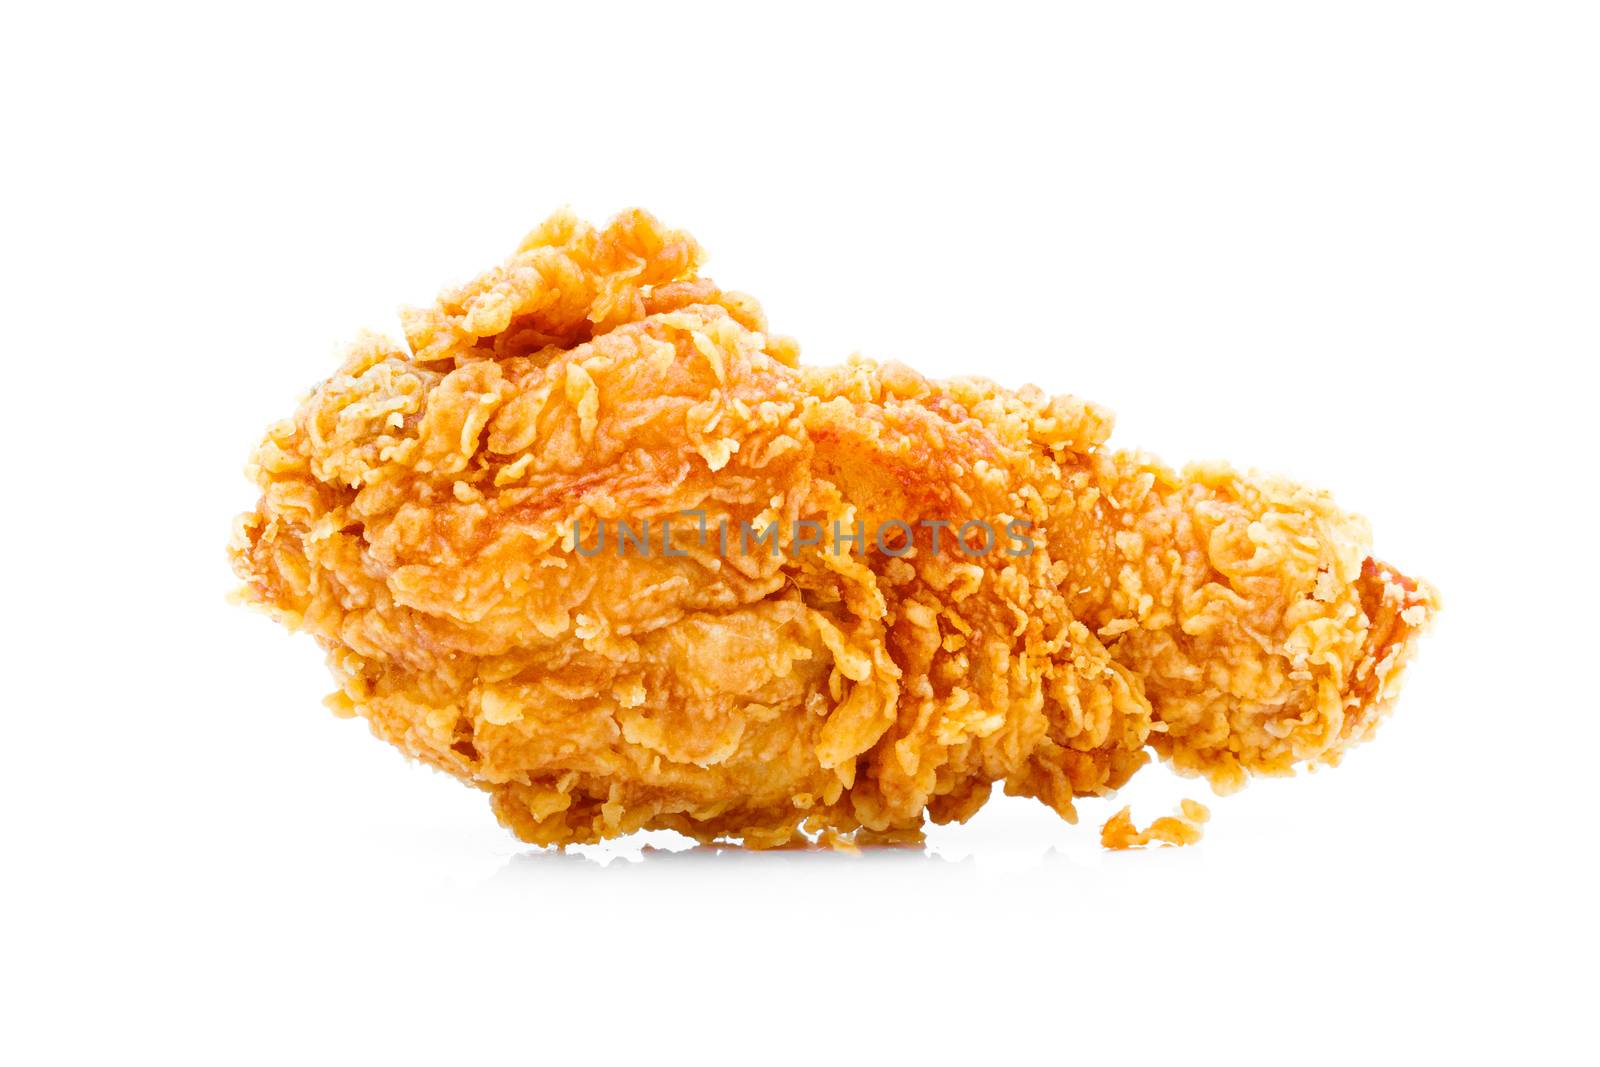 Fried Crispy Chicken on a white background